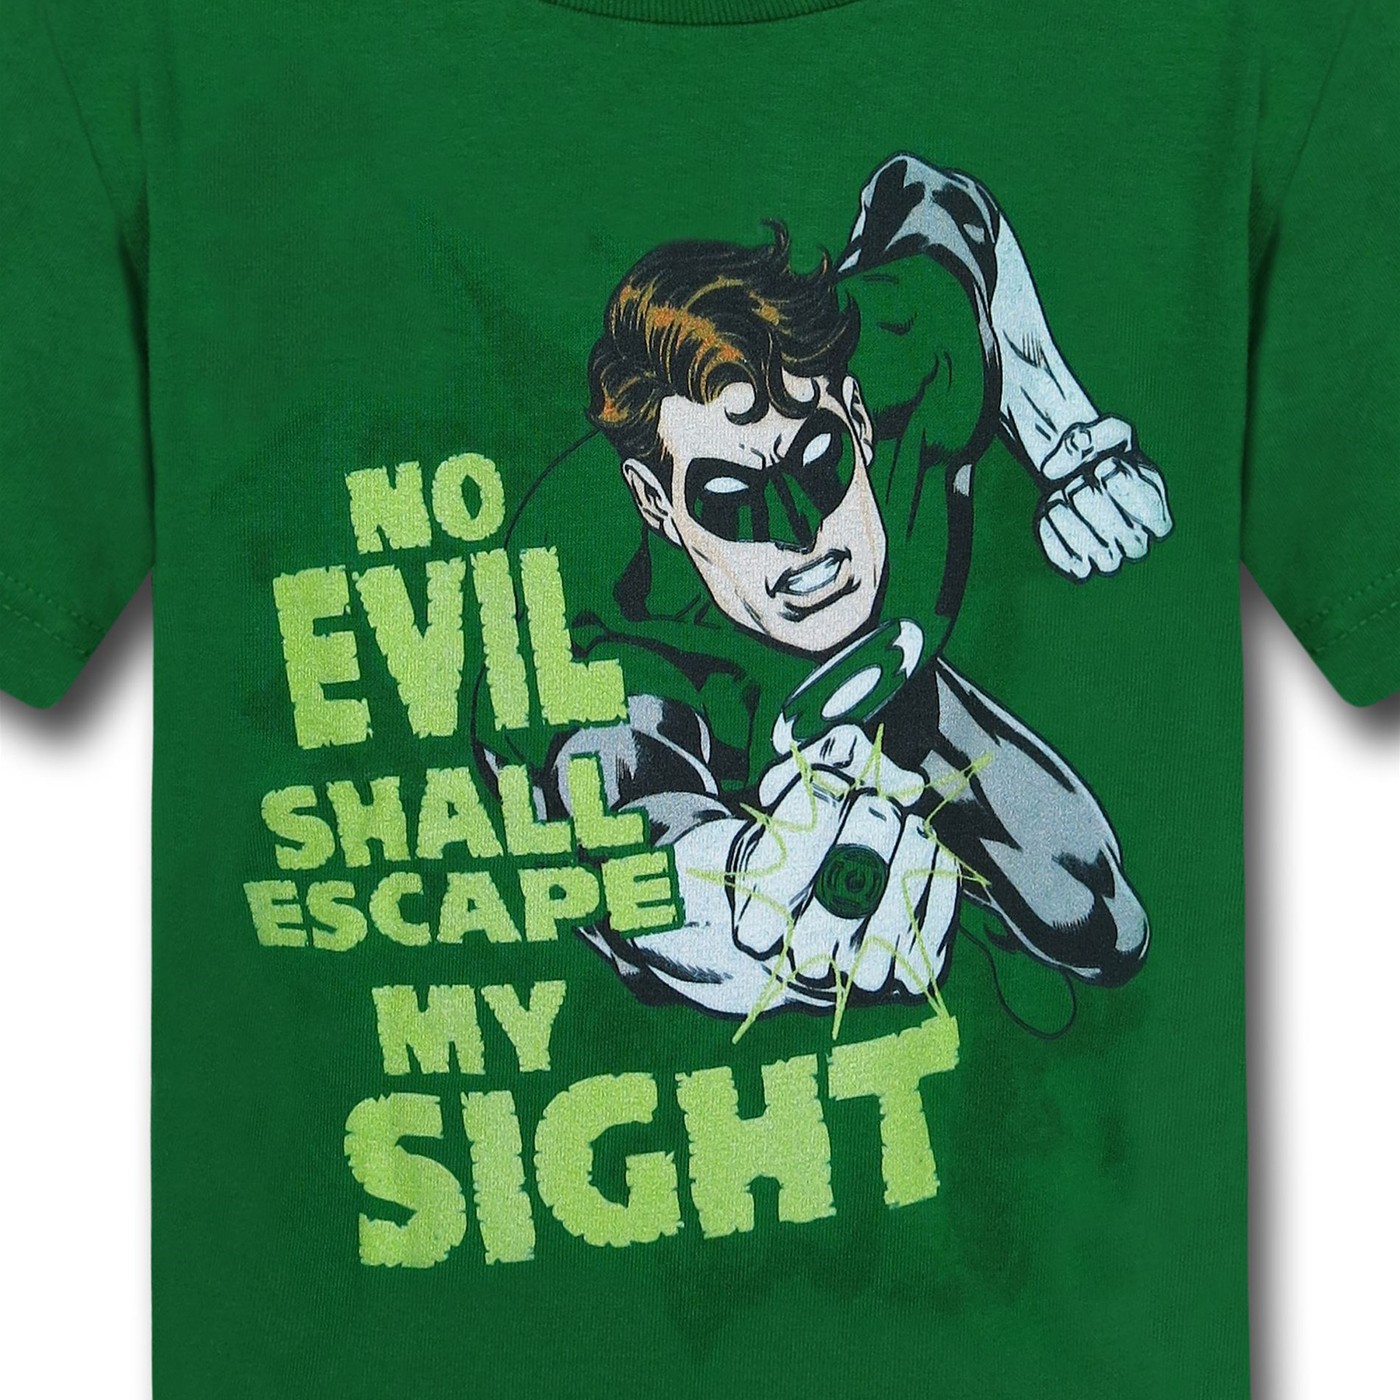 Green Lantern No Evil Kids T-Shirt